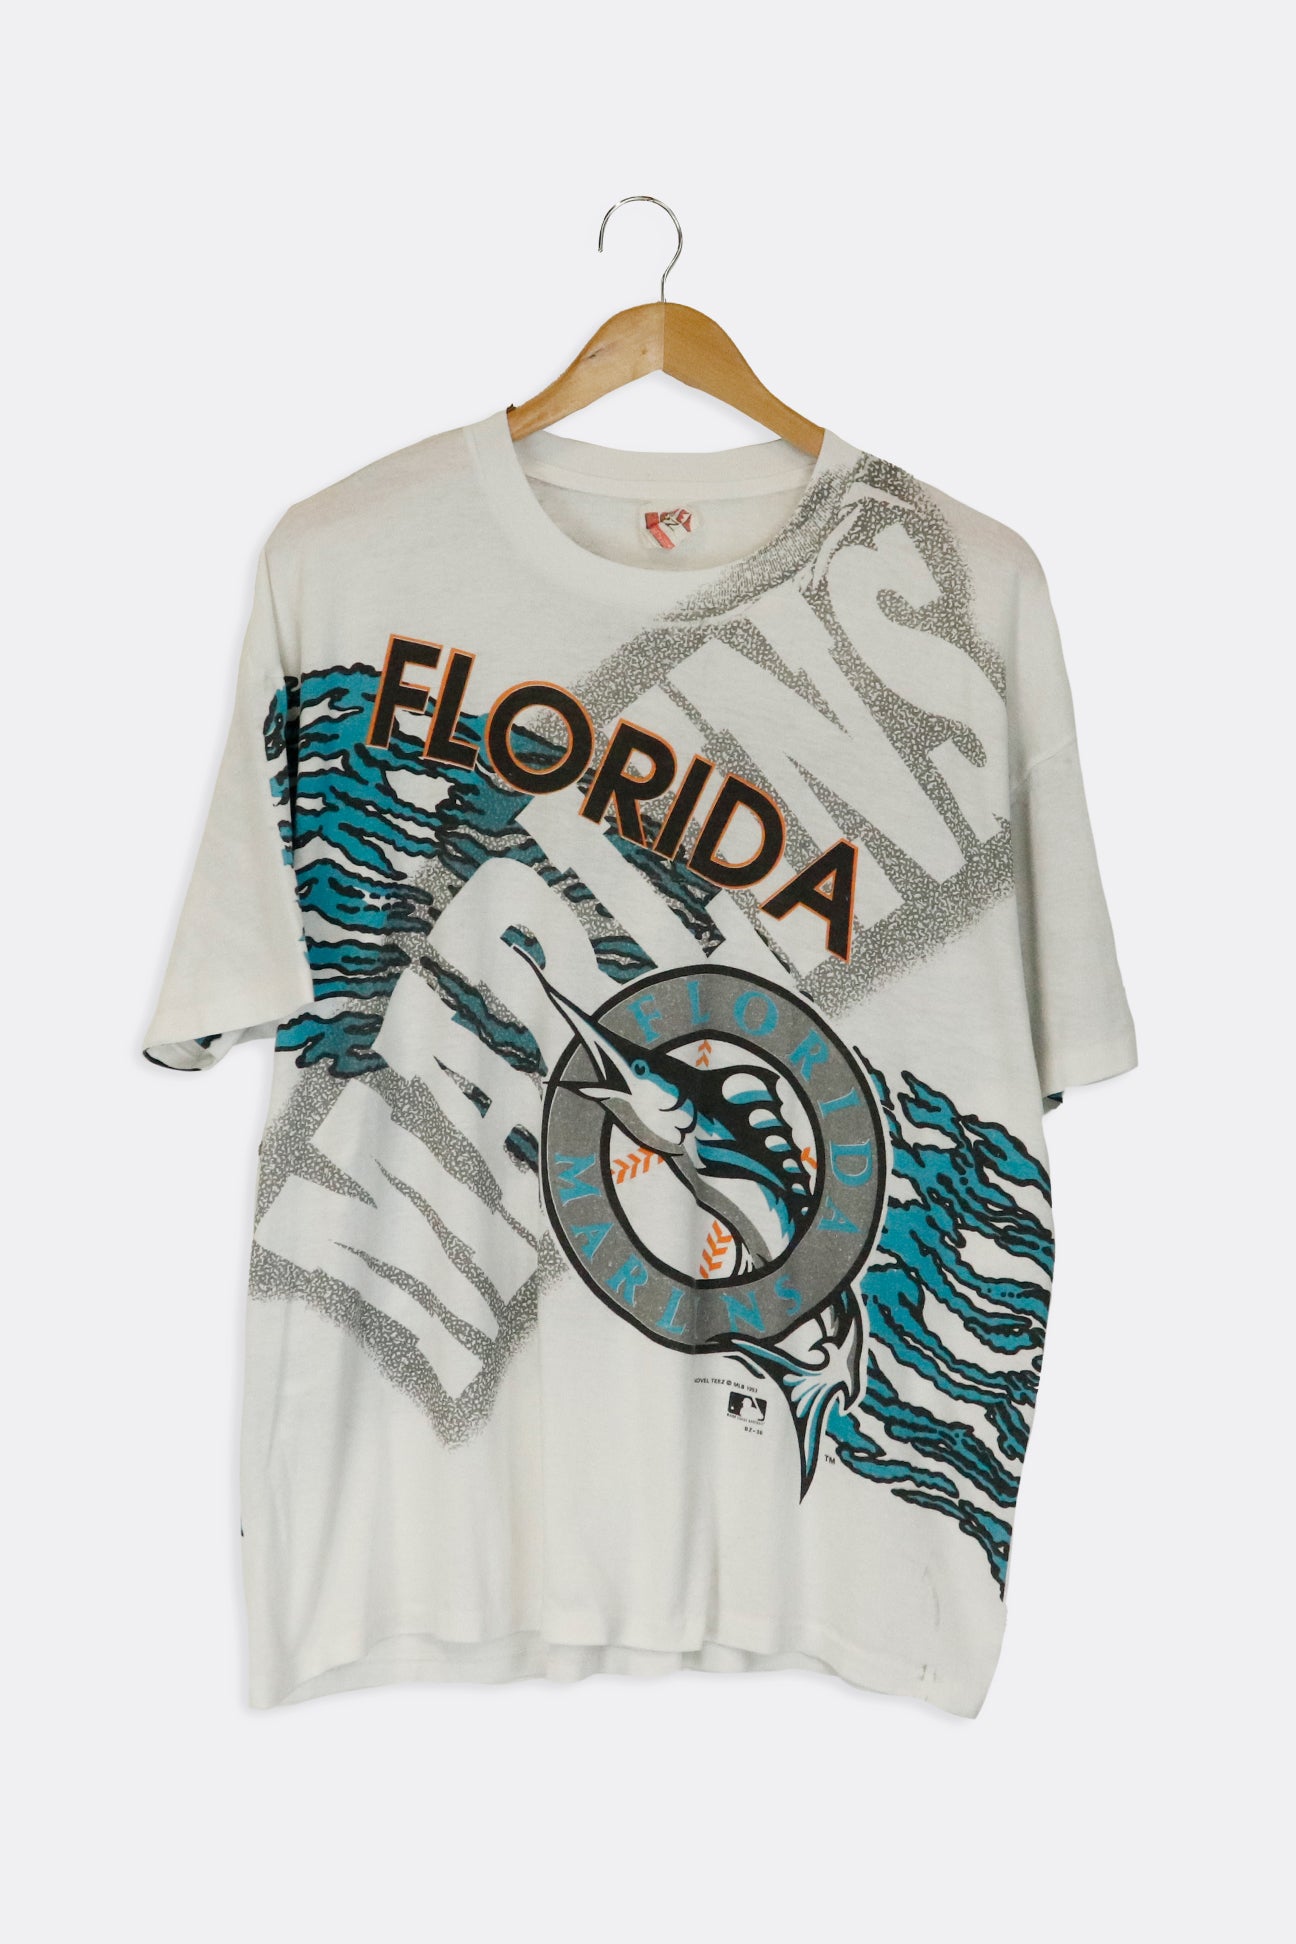 Vintage 1997 Florida Marlins World Series Champions MLB White T-Shirt Size  XL